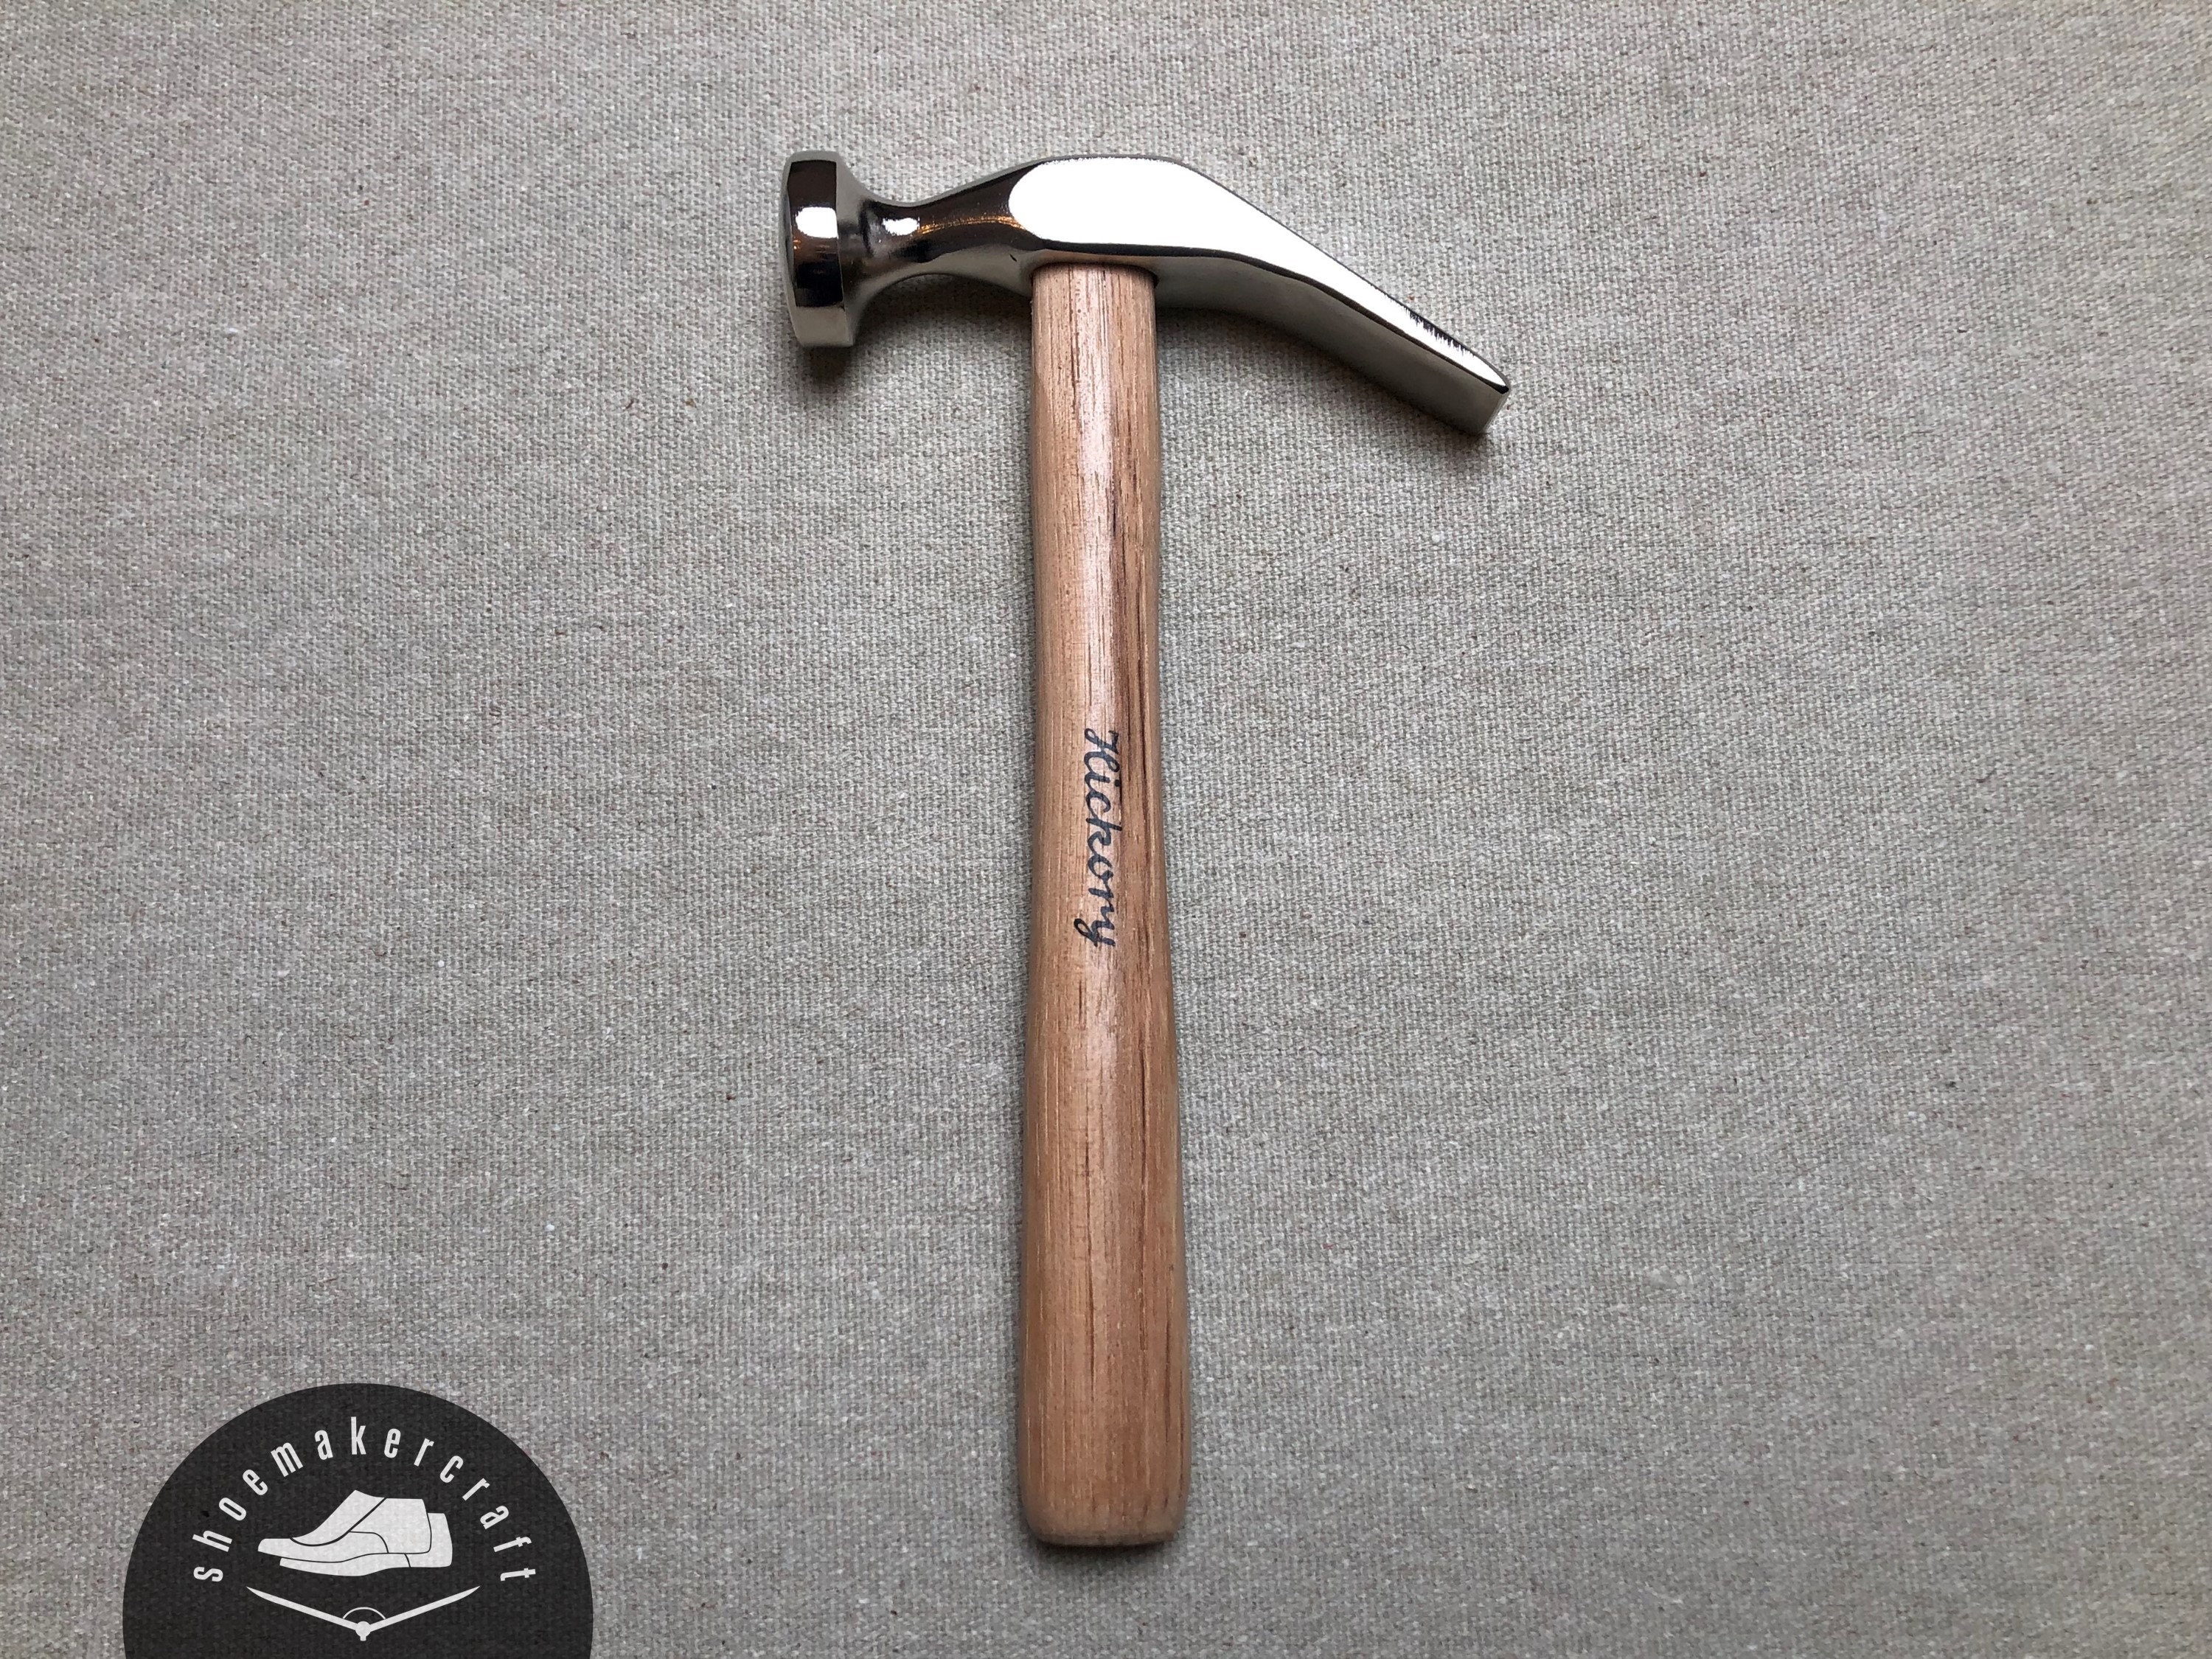 Hefddehy Cobbler Shoe Repair Hammer Wood Handle Leather Work - Import It All